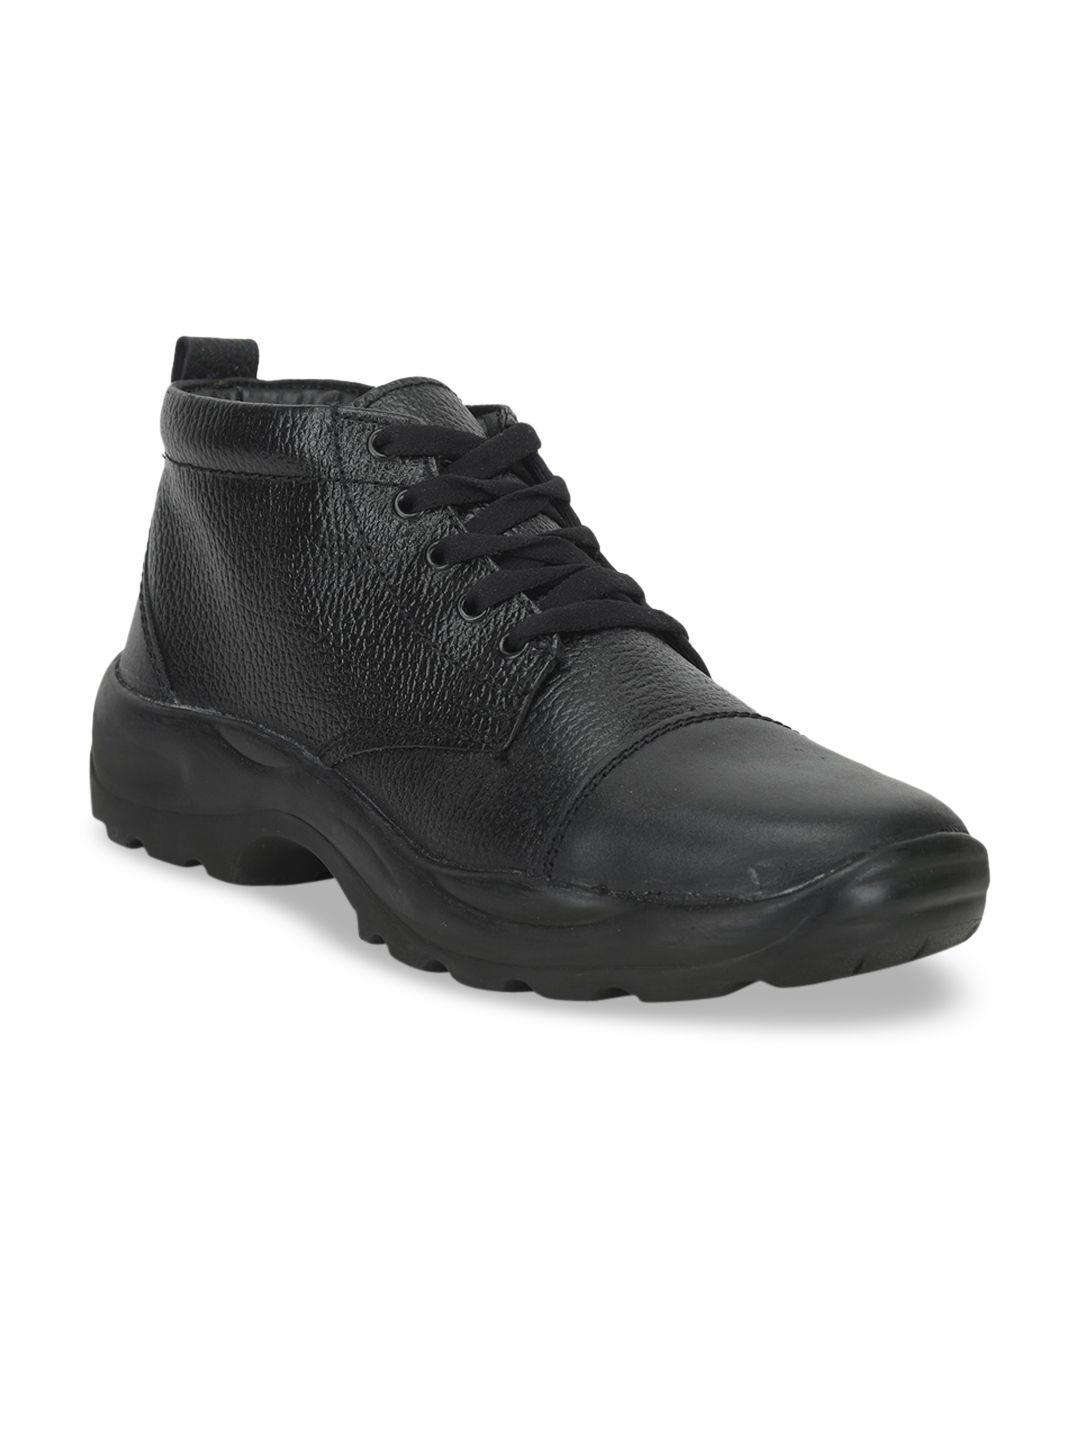 liberty men black leather flat boots